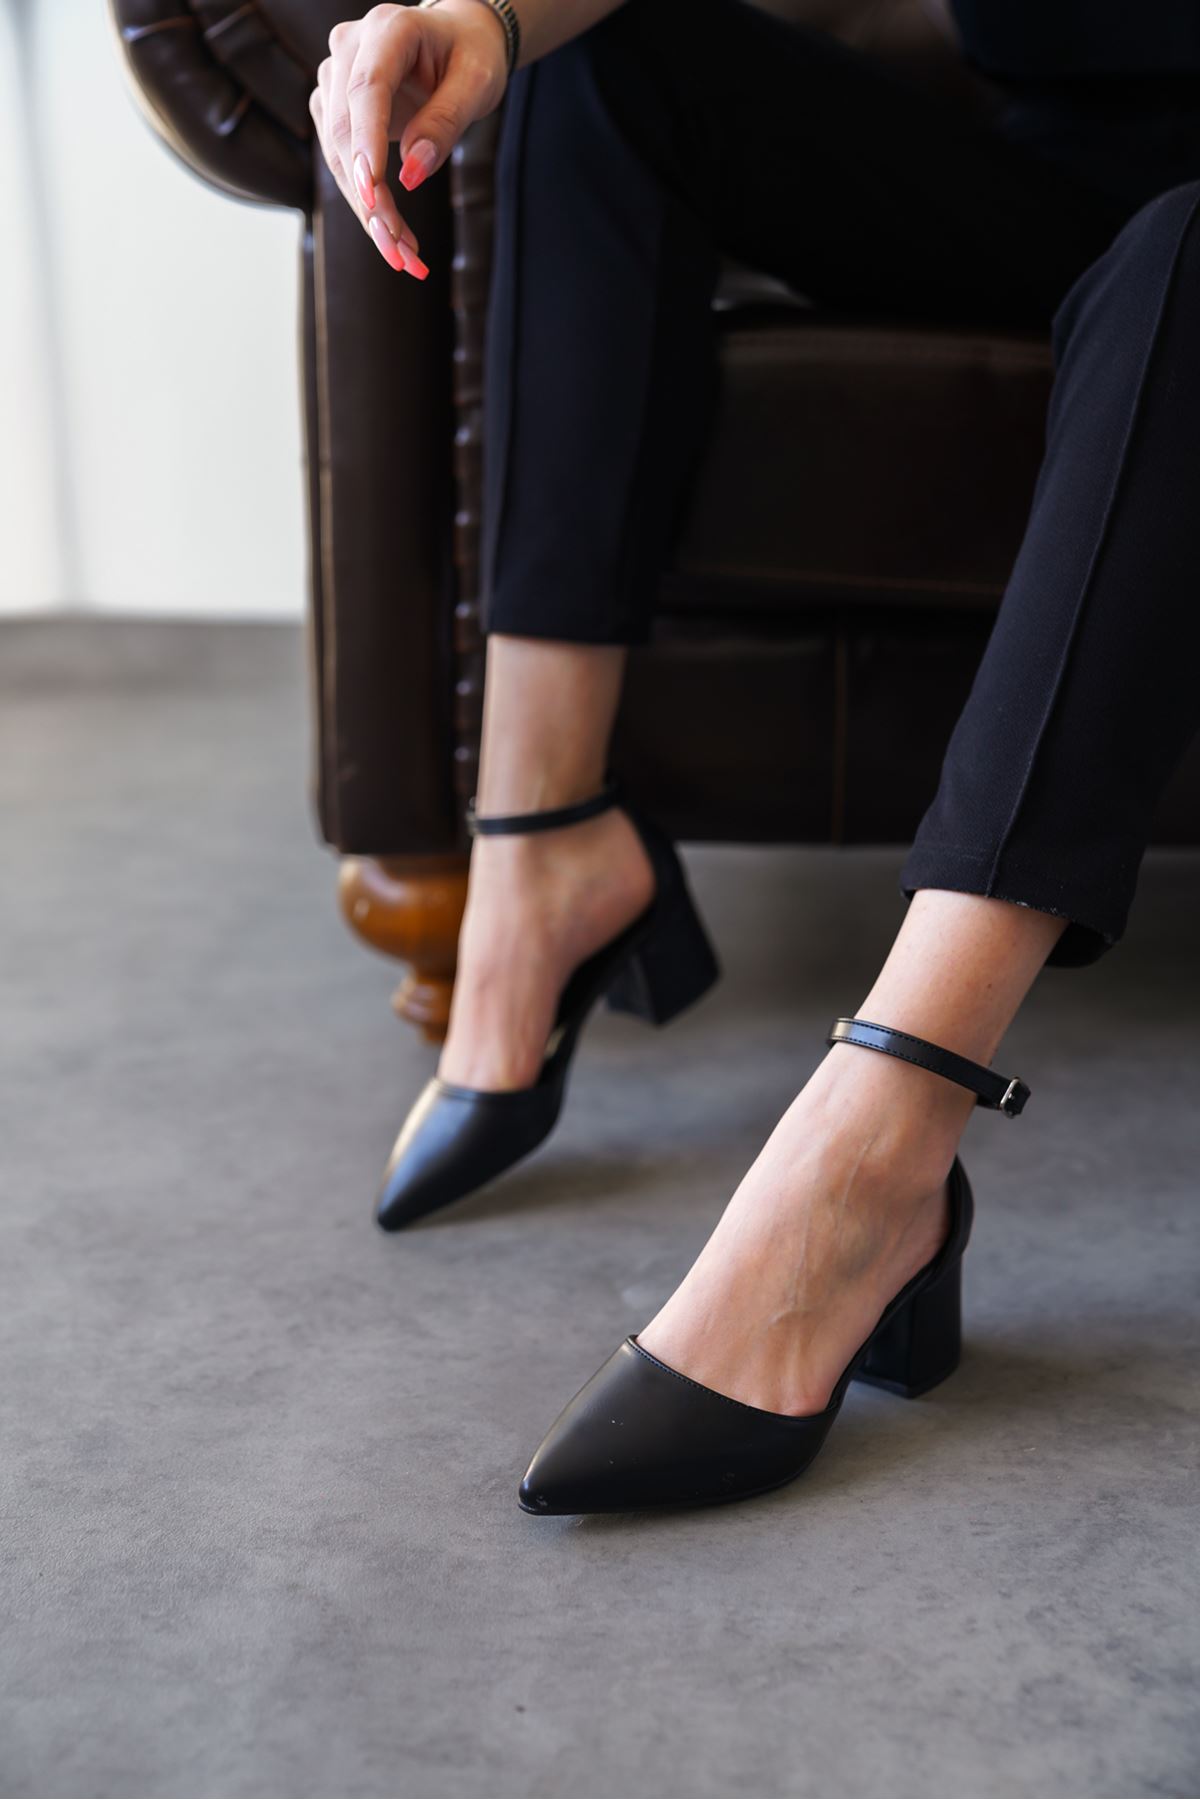 Kadın Lacita Topuklu Ayakkabı - siyah-deri